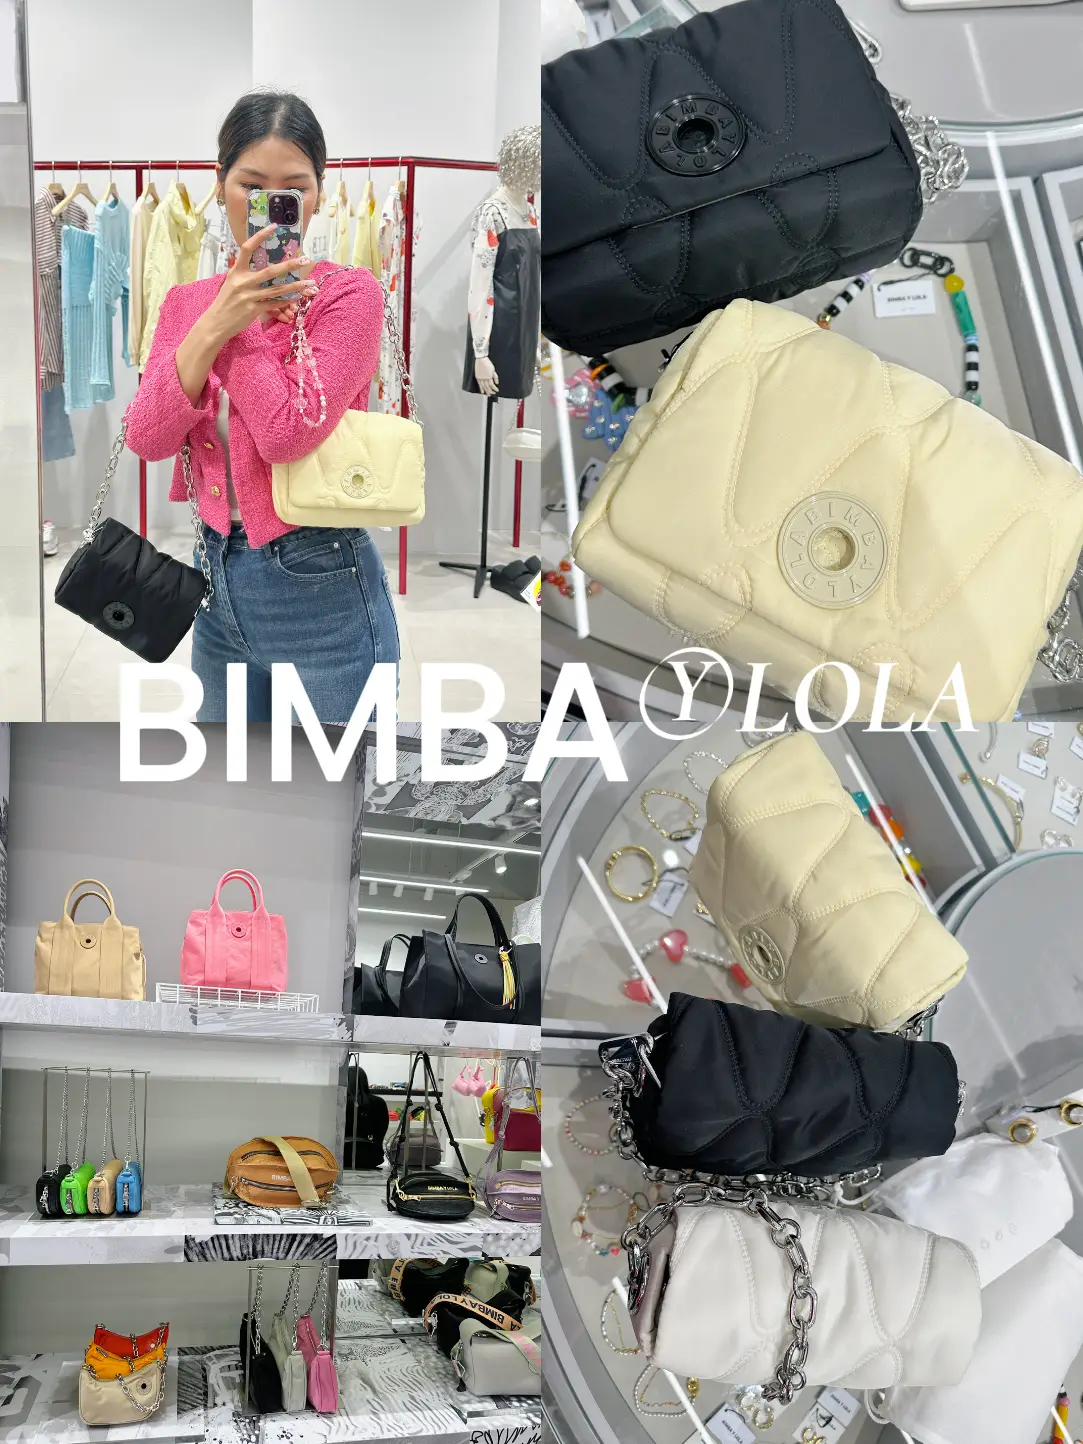 Brand to brush up on: Bimba y Lola